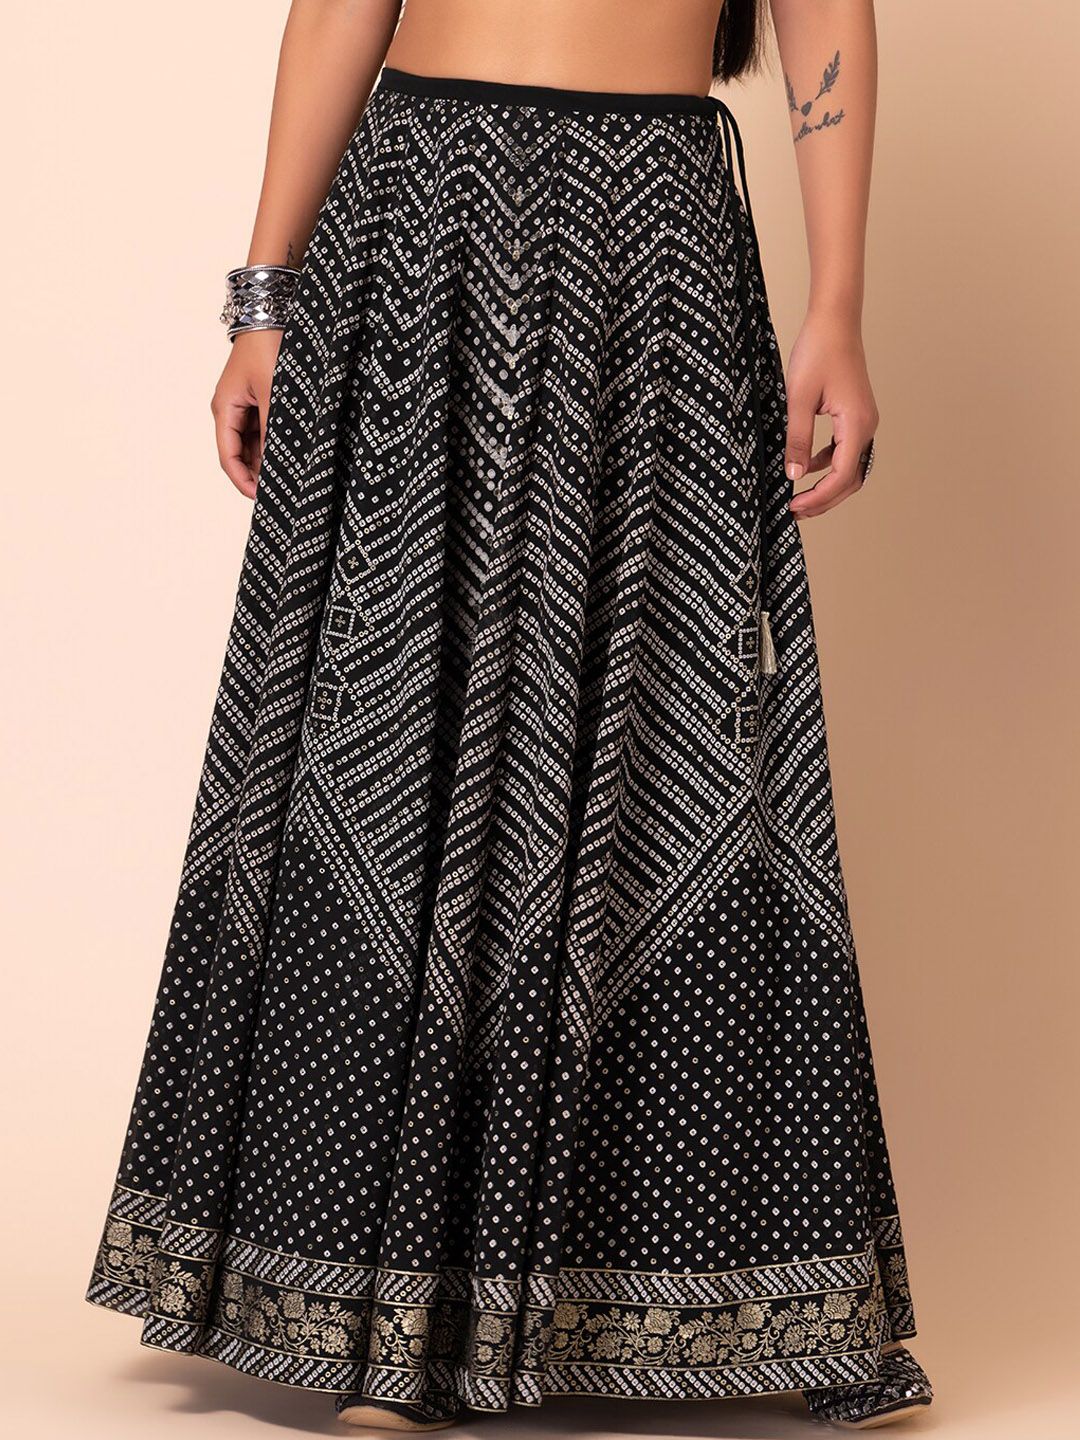 INDYA Bandhani Printed Flared Lehenga Skirt Price in India